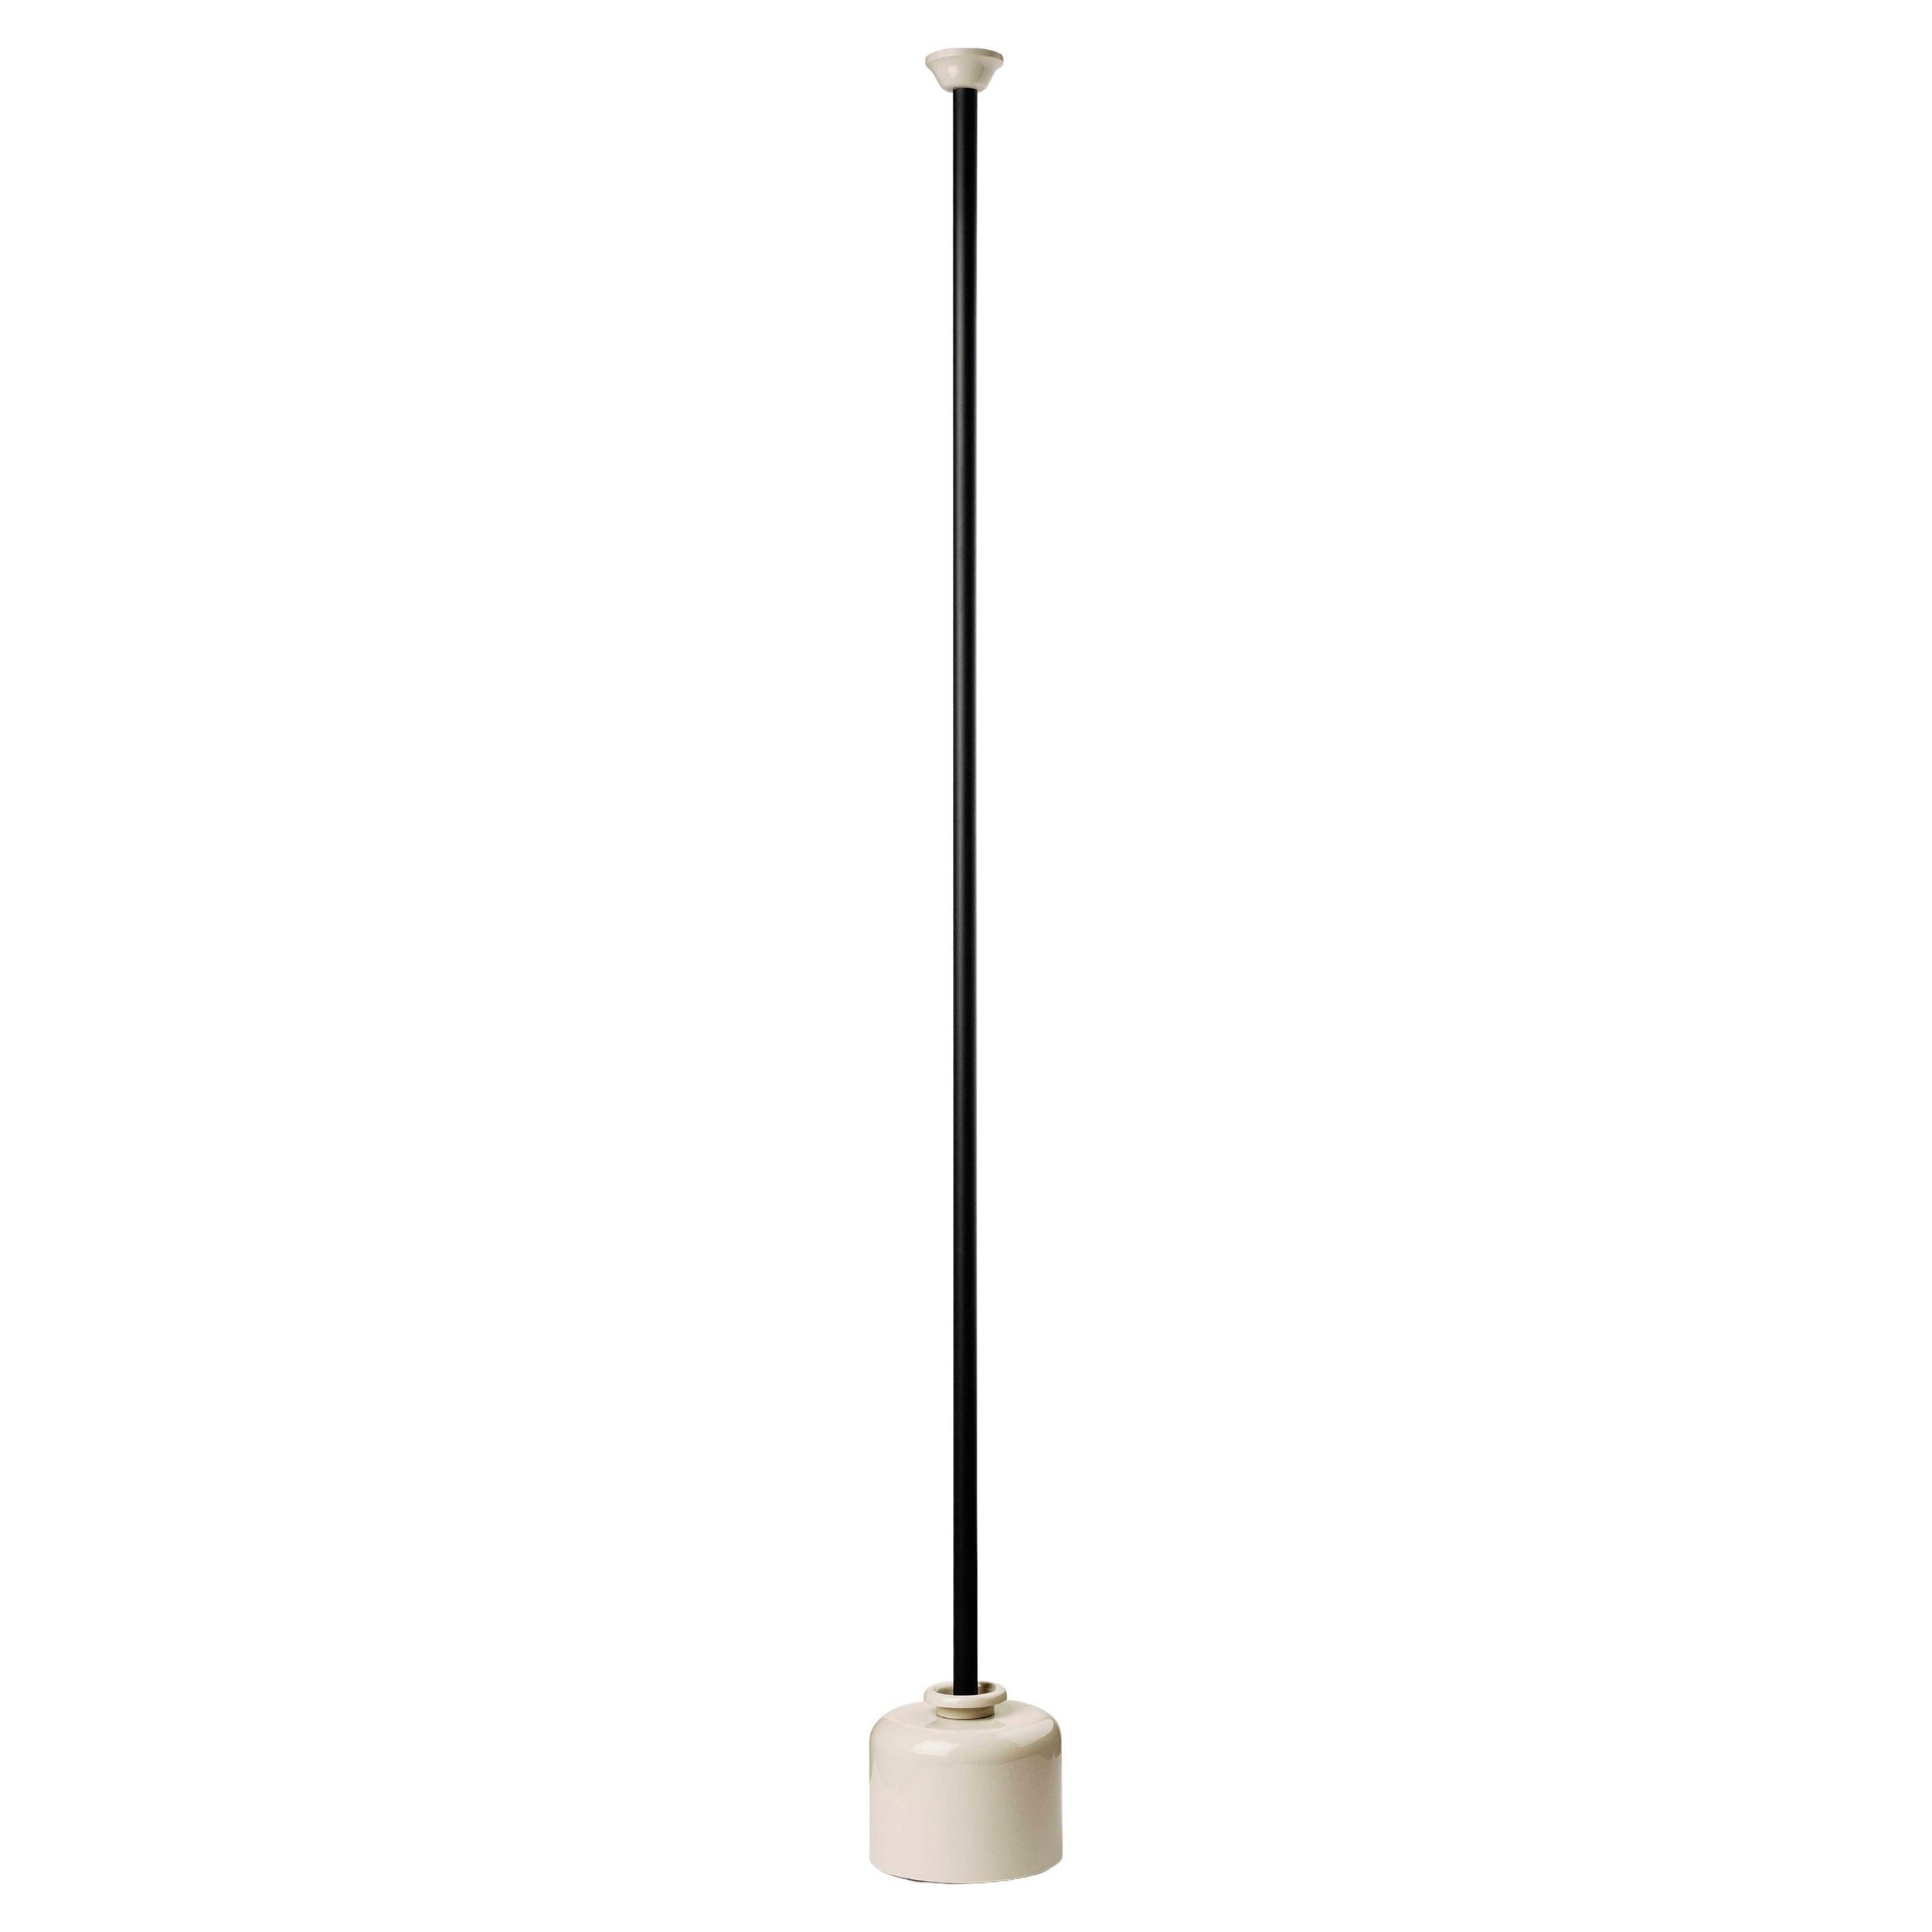 Gino Sarfatti Model 1095 Floor Lamp for Astep